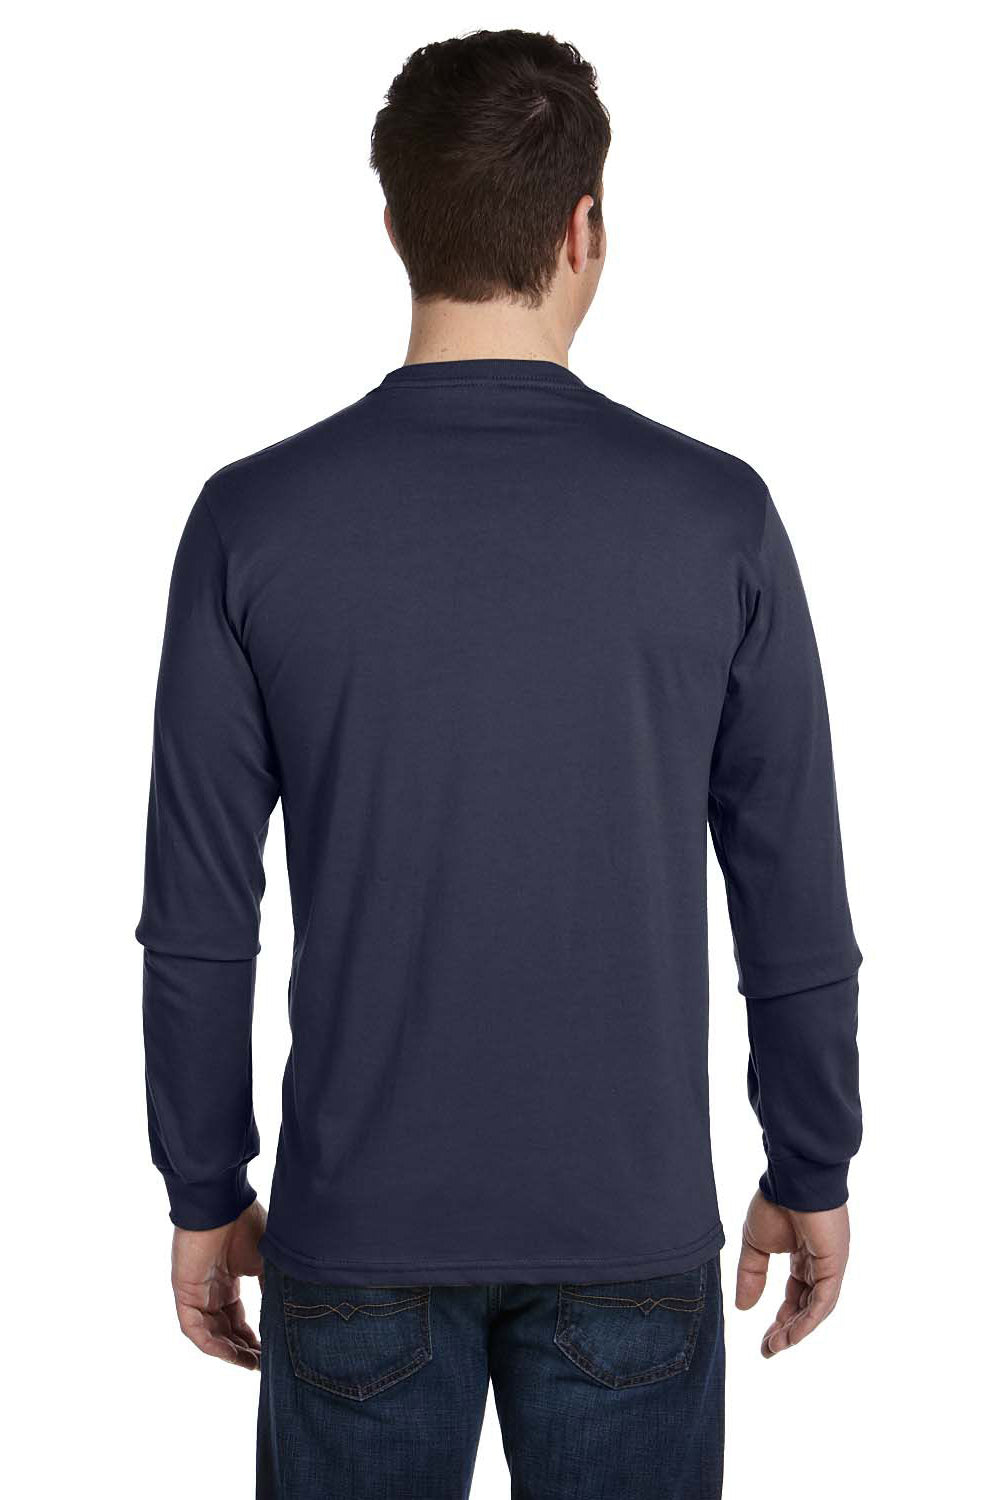 Econscious EC1500 Mens Long Sleeve Crewneck T-Shirt Pacific Blue Back